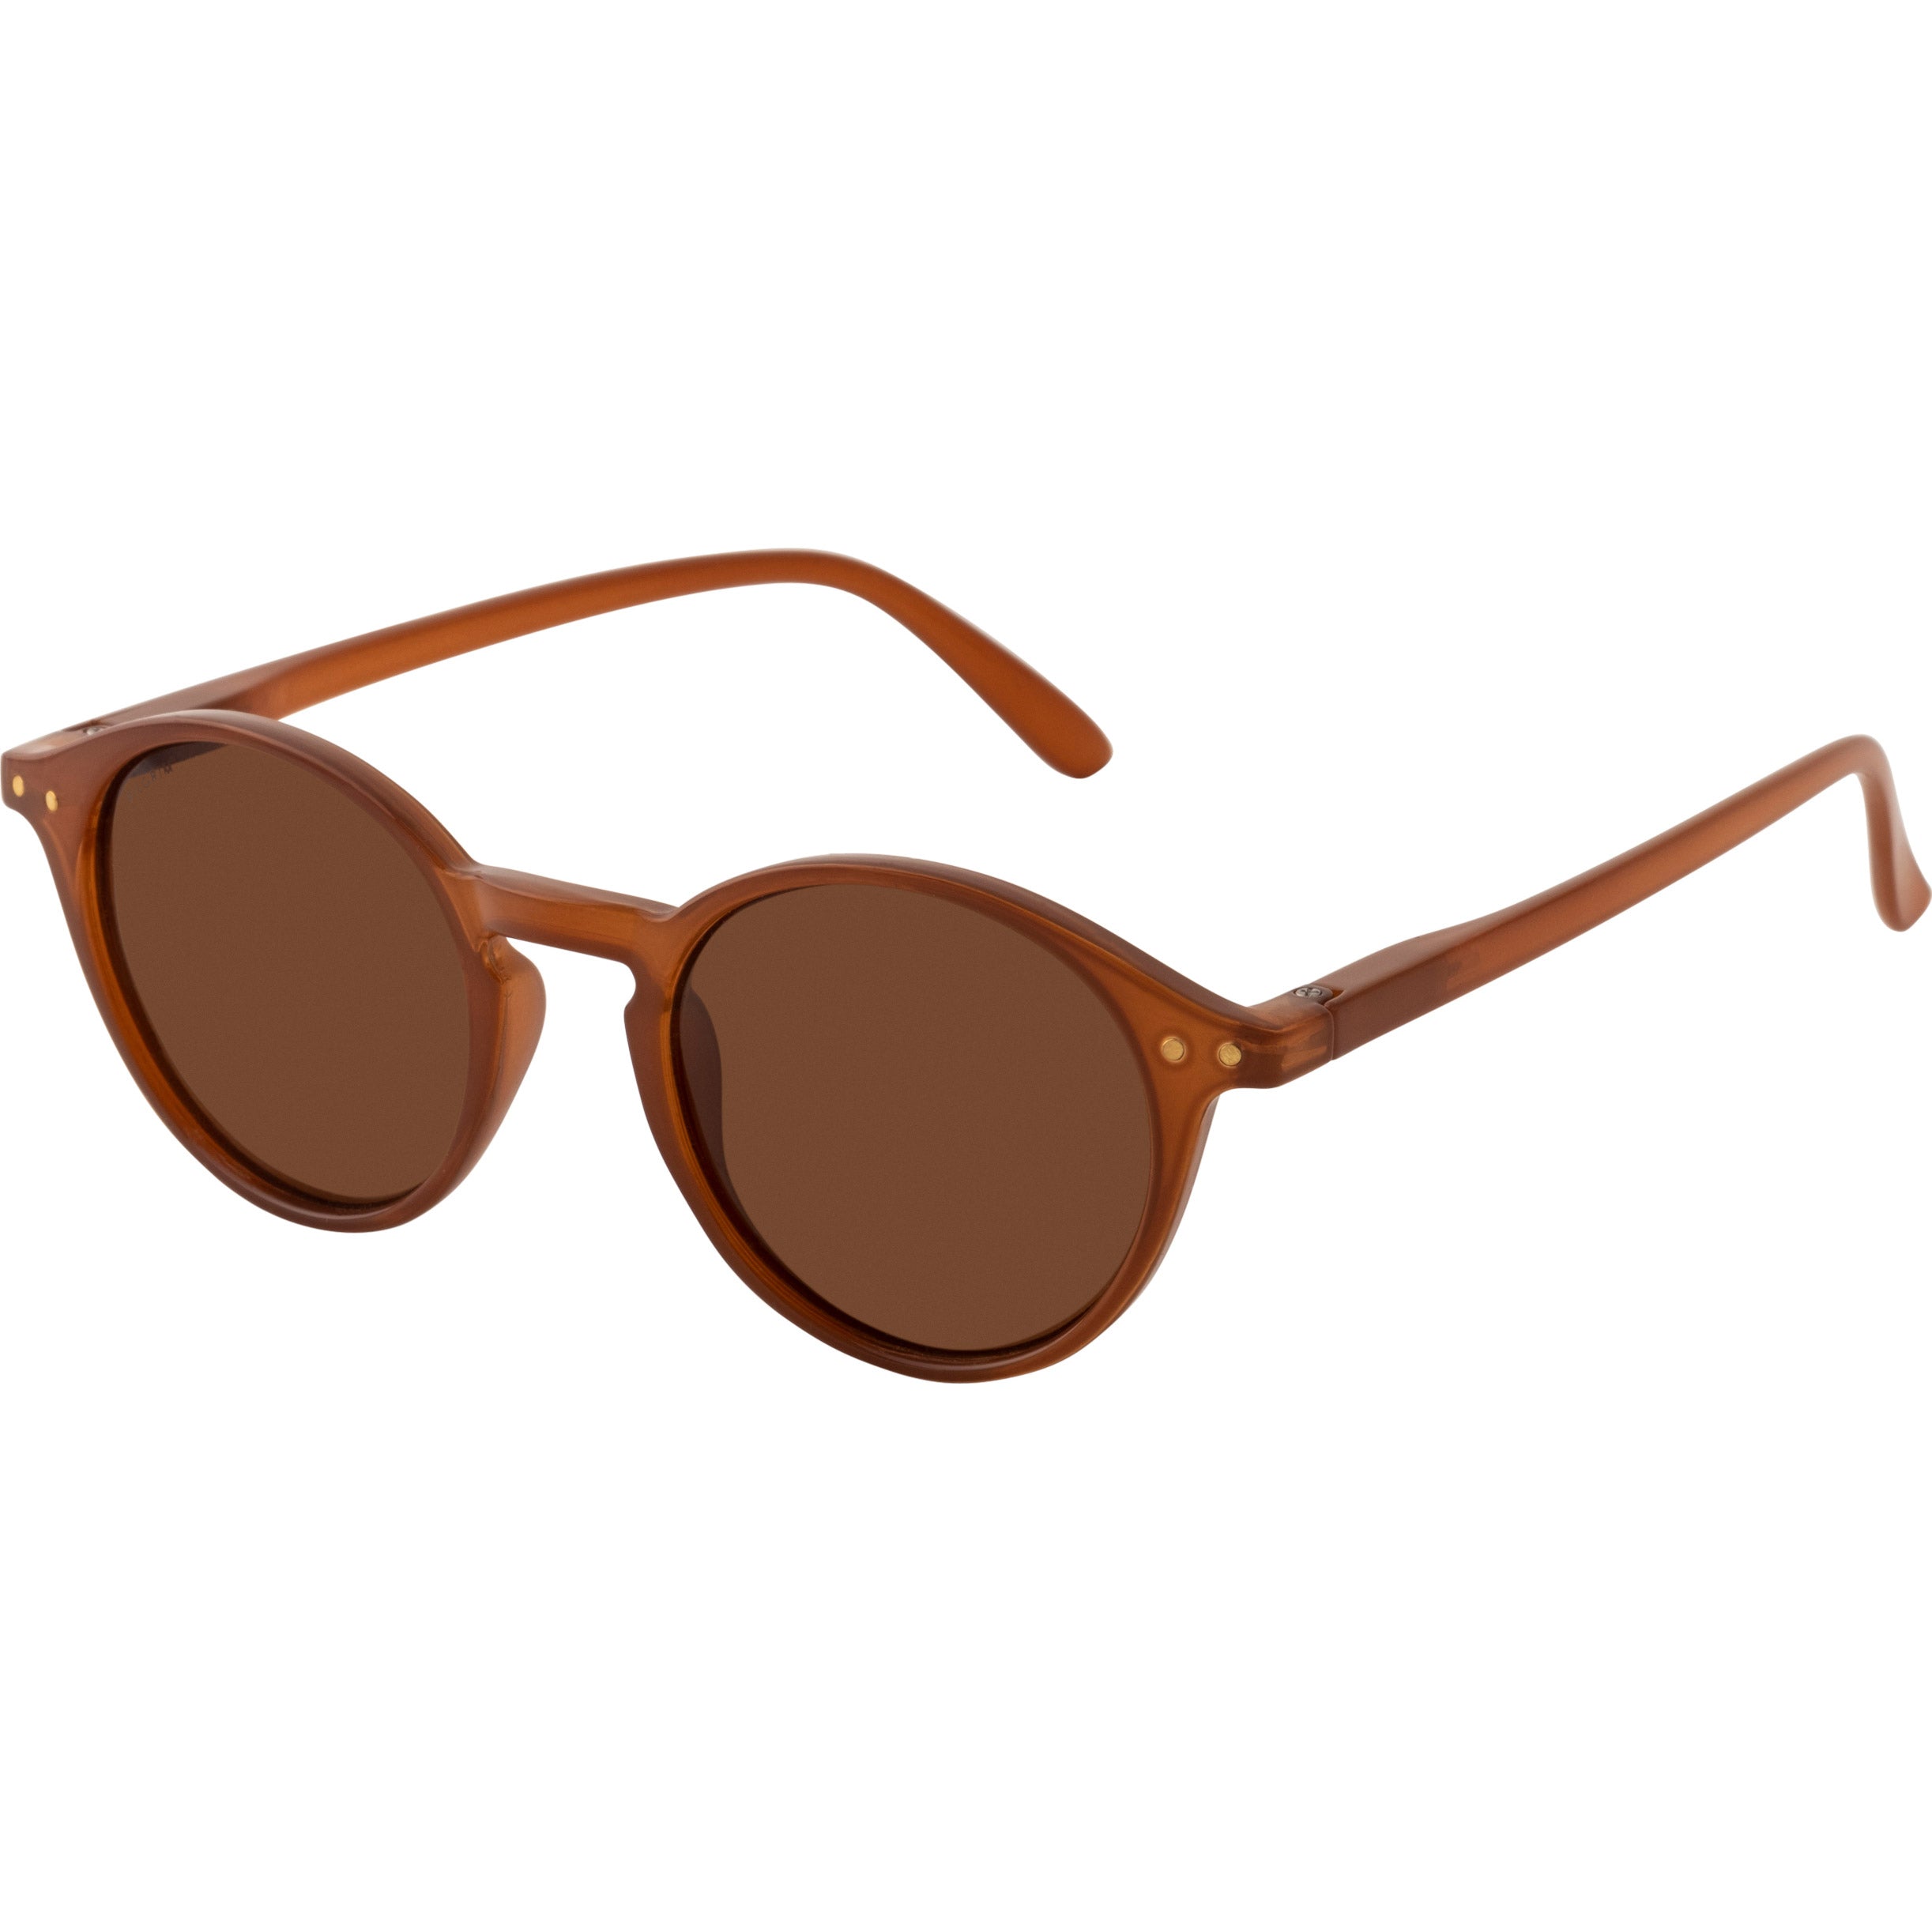 ROXANNE classic round shaped – sunglasses, Pilgrim brown